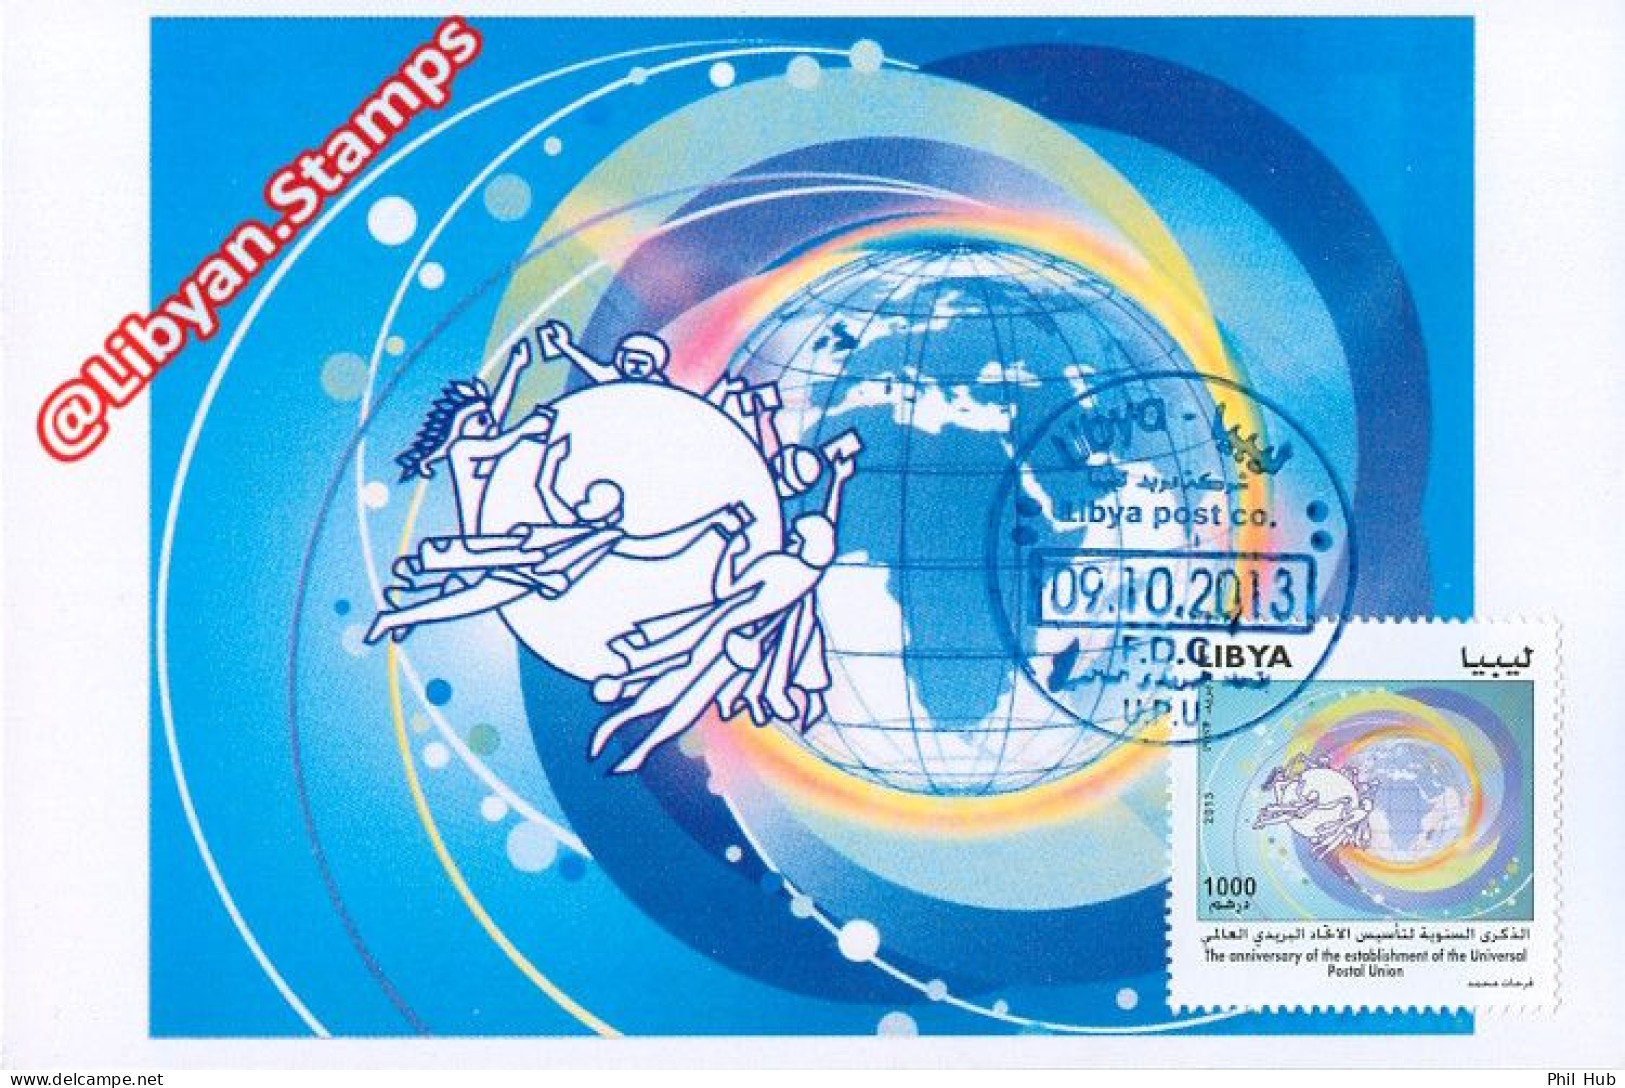 LIBYA 2013 UPU Universal Postal Union (MAXIMUM-CARD) - U.P.U.